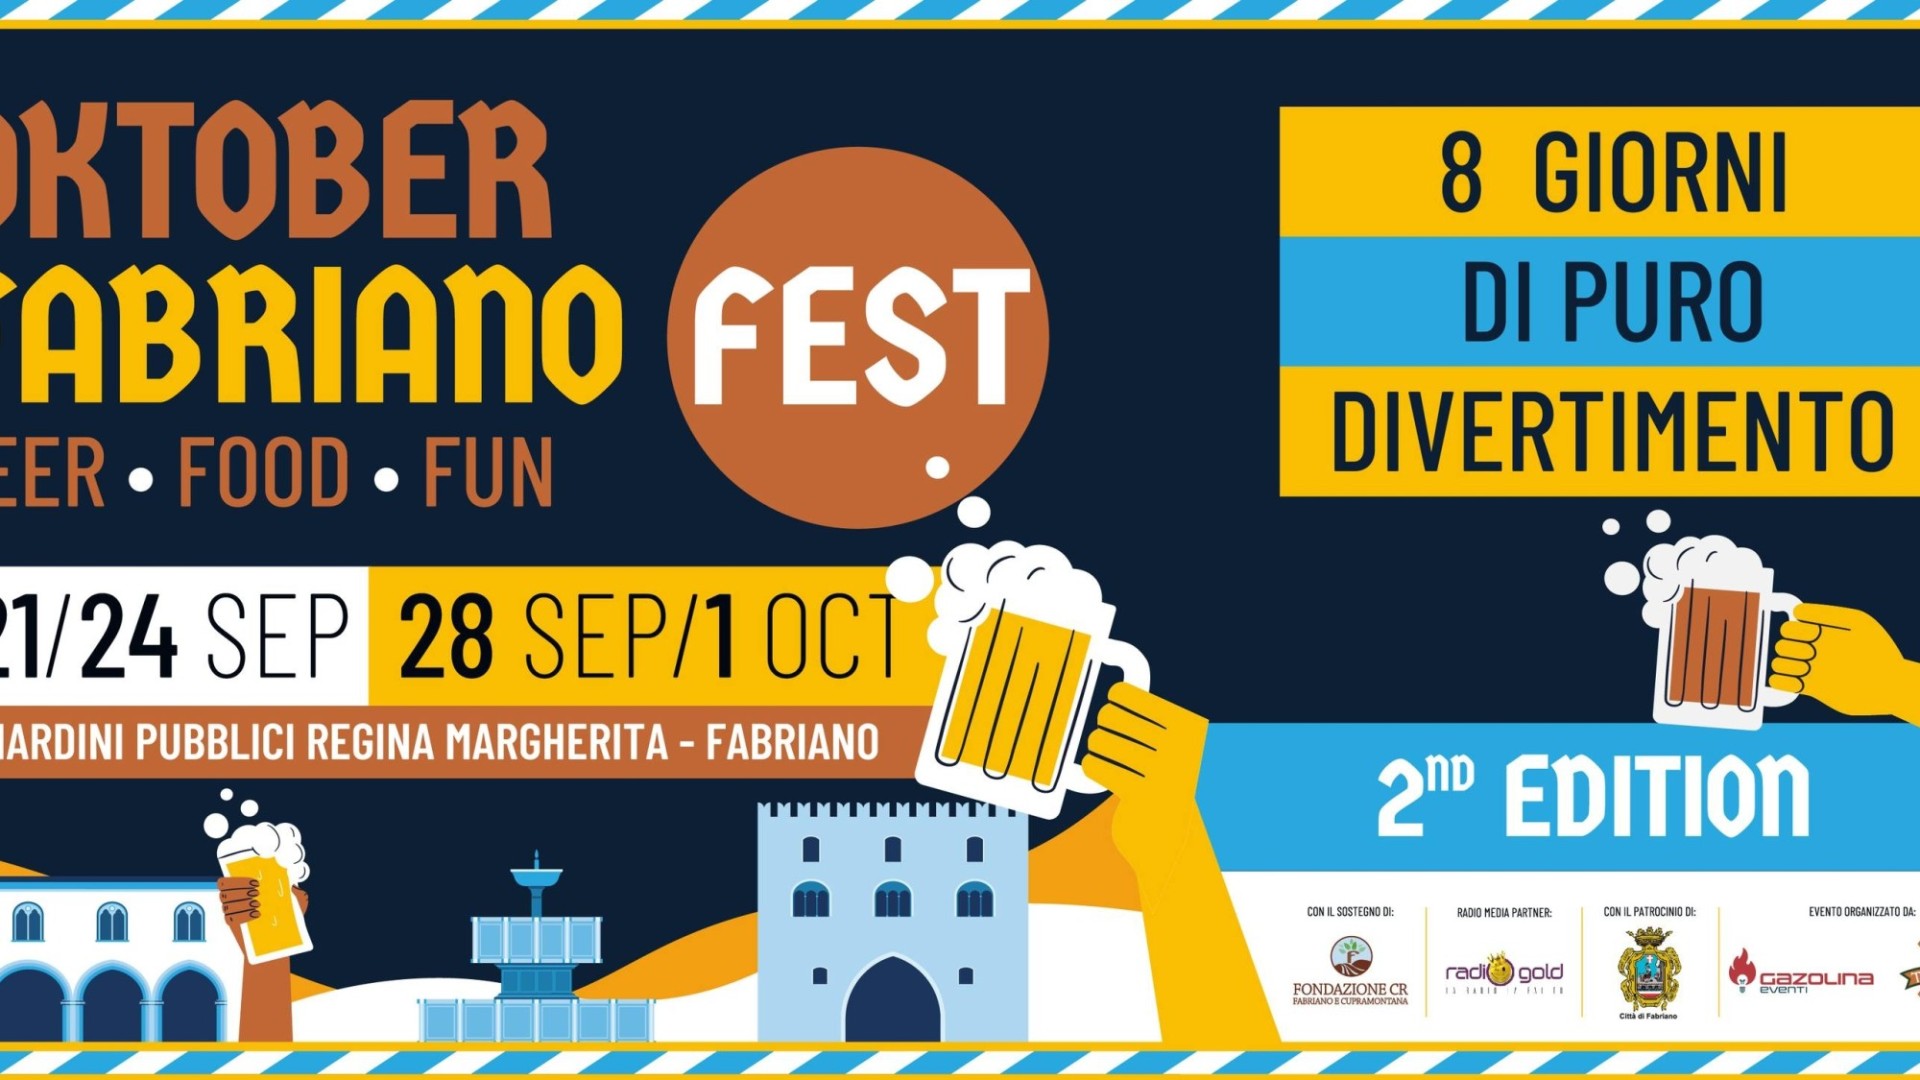 Oktober Fabriano Fest - 2nd Edition!